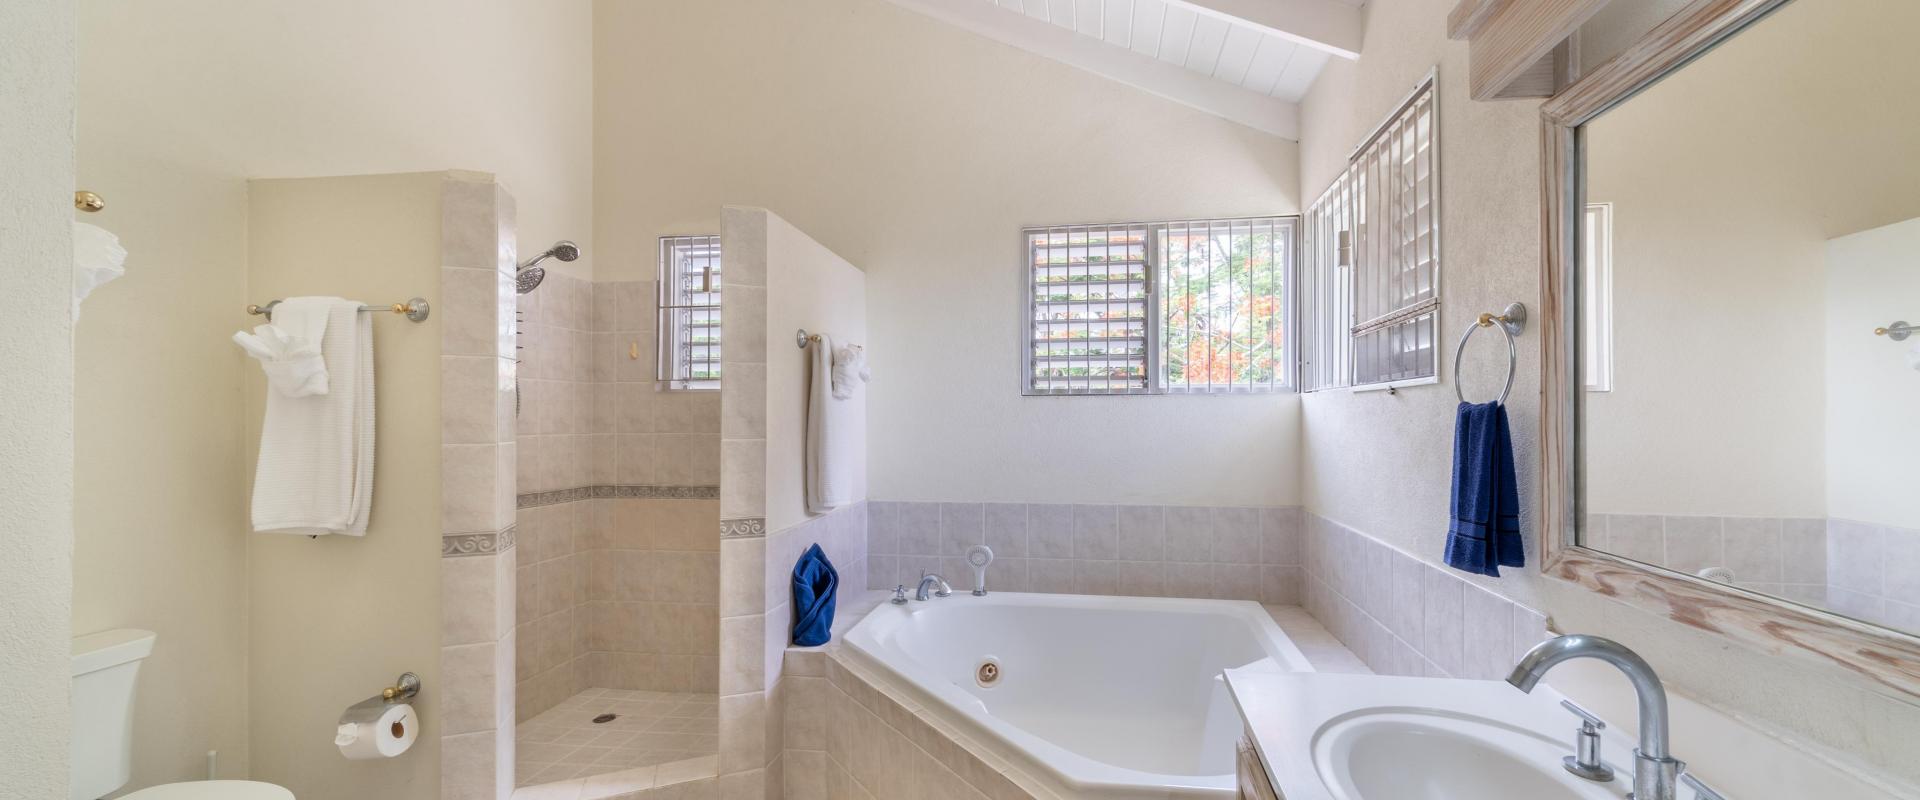 149 Salters Road Barbados Holiday Rental Sandy Lane Barbados Master Bathroom Tub and Shower